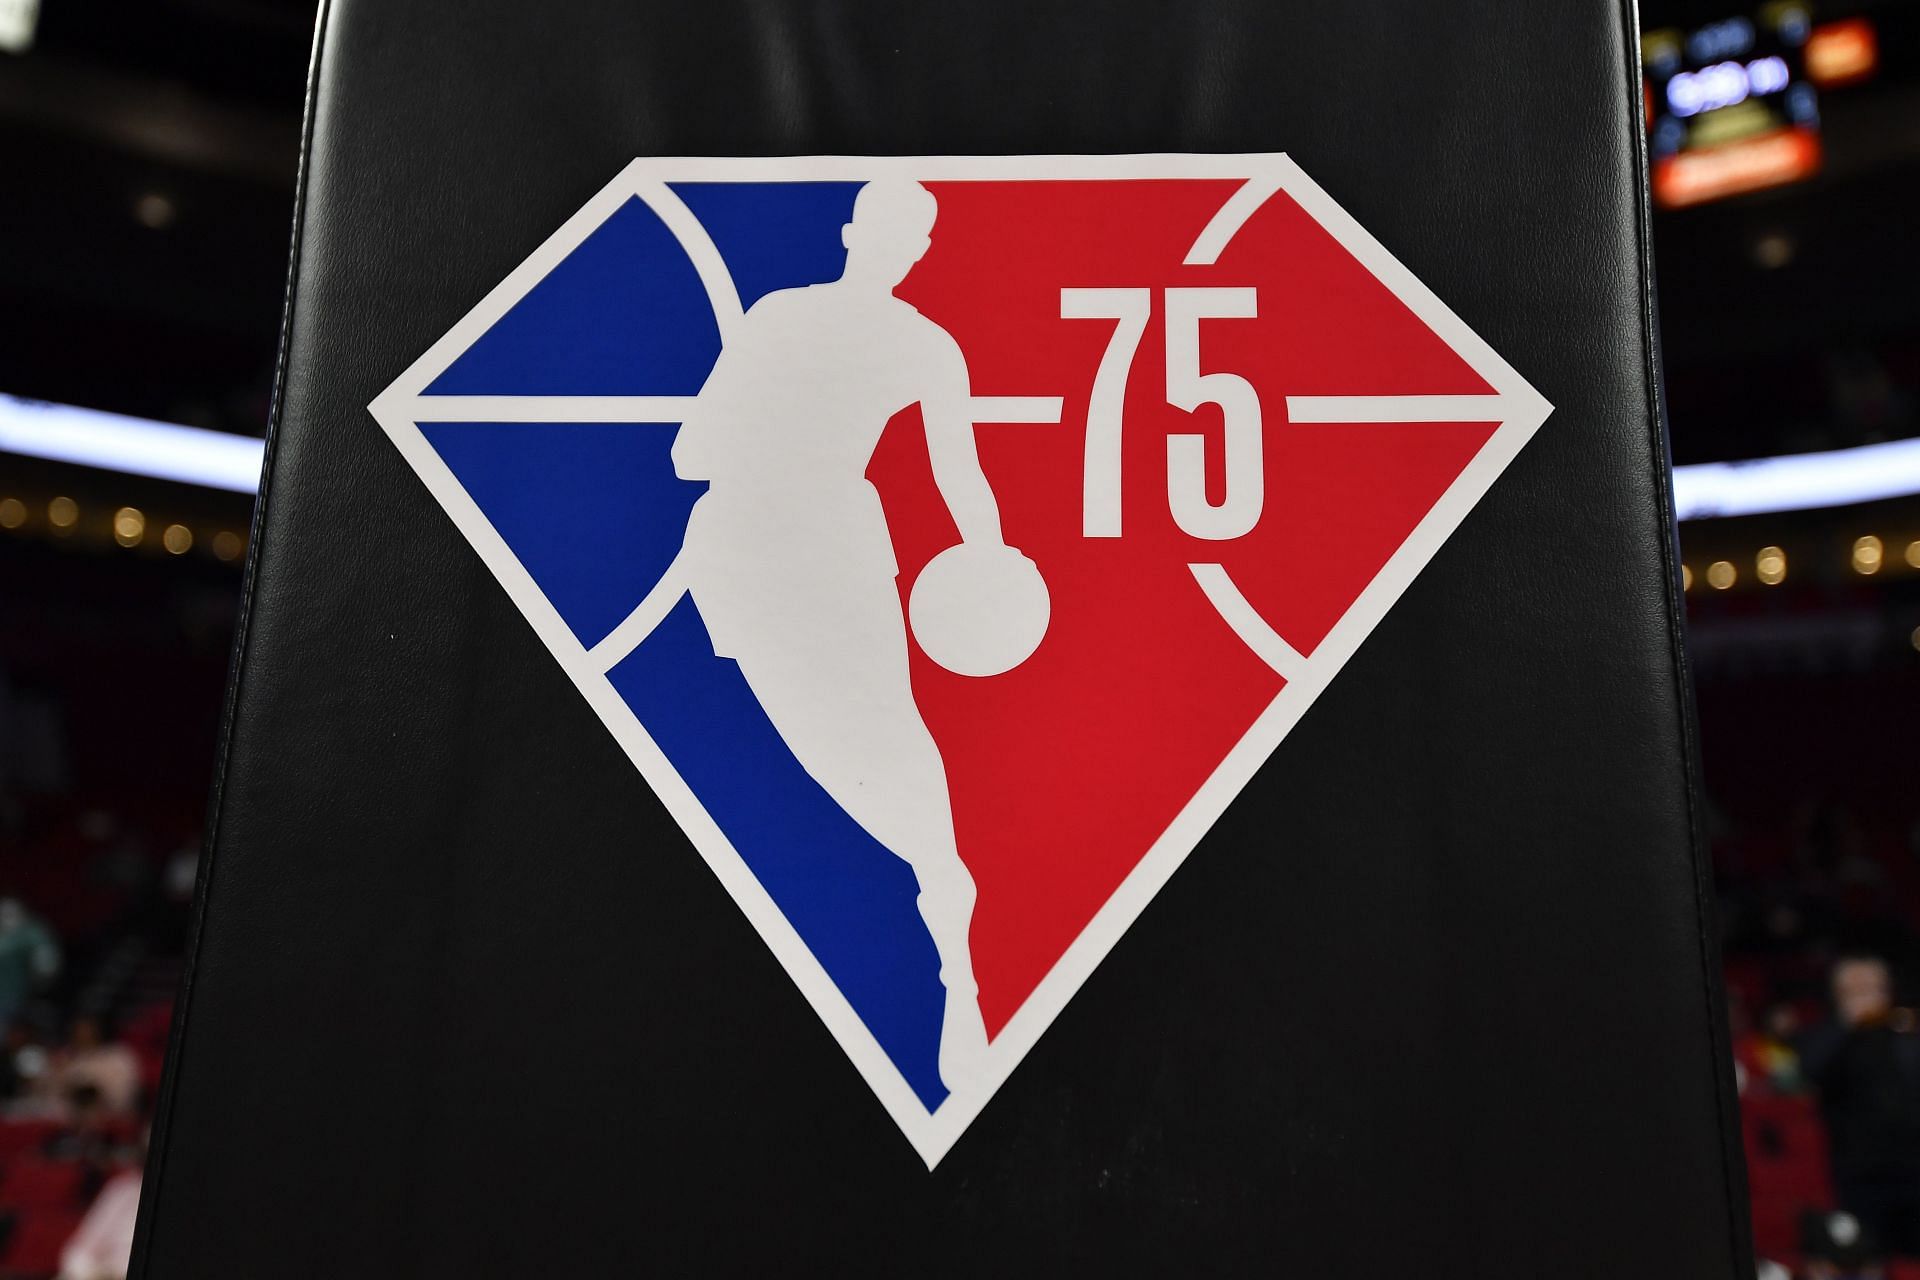 75th Annivesary Logo of the NBA